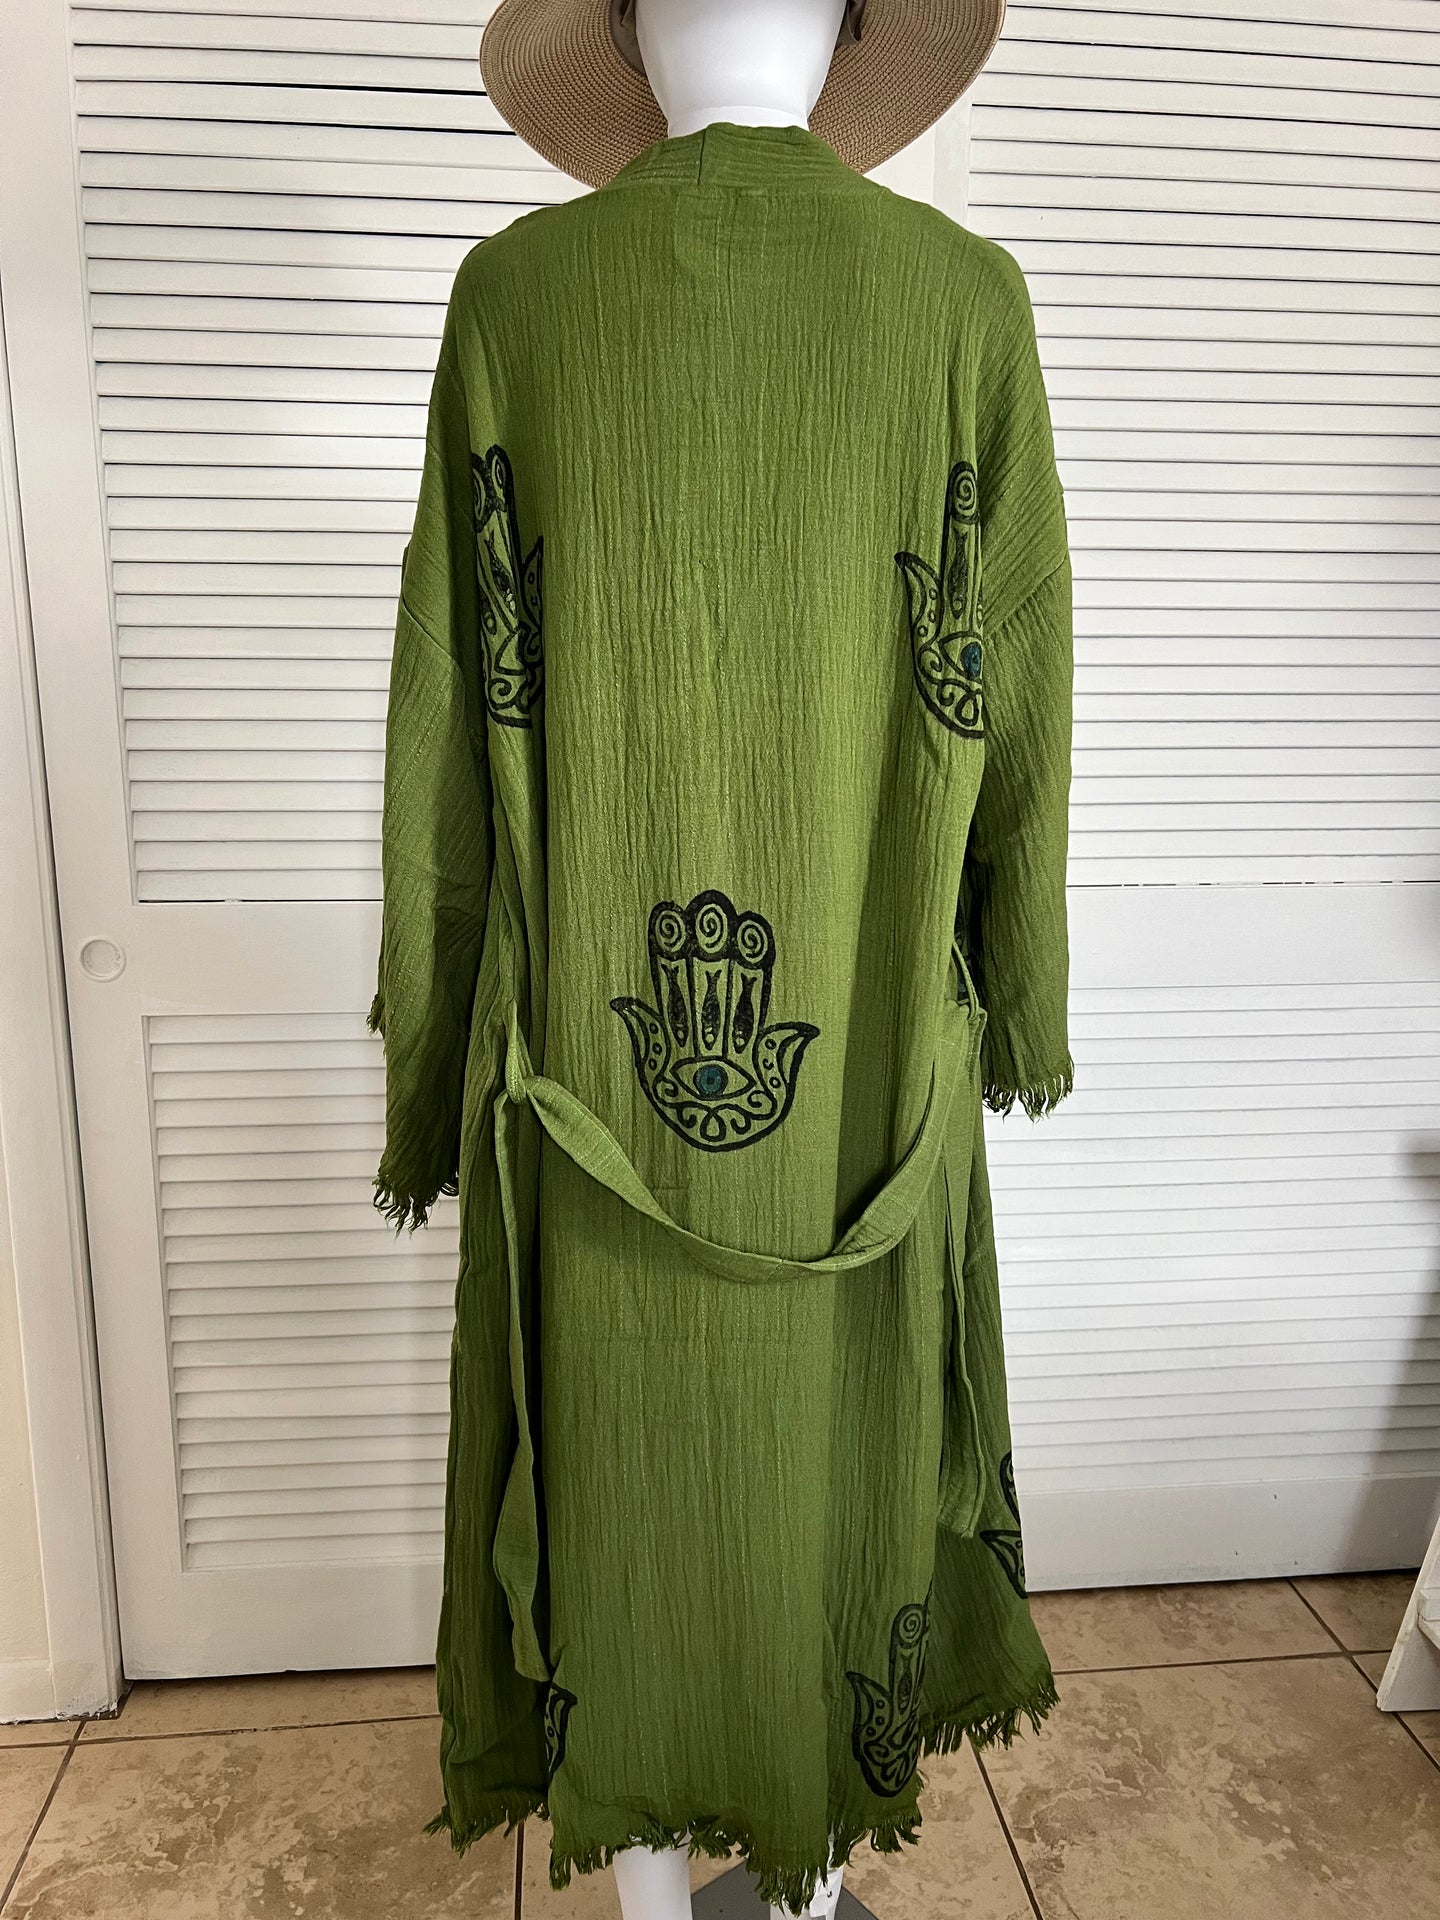 Fatima’s Hand Kimono,  Robe-Green,  Lounge Wear